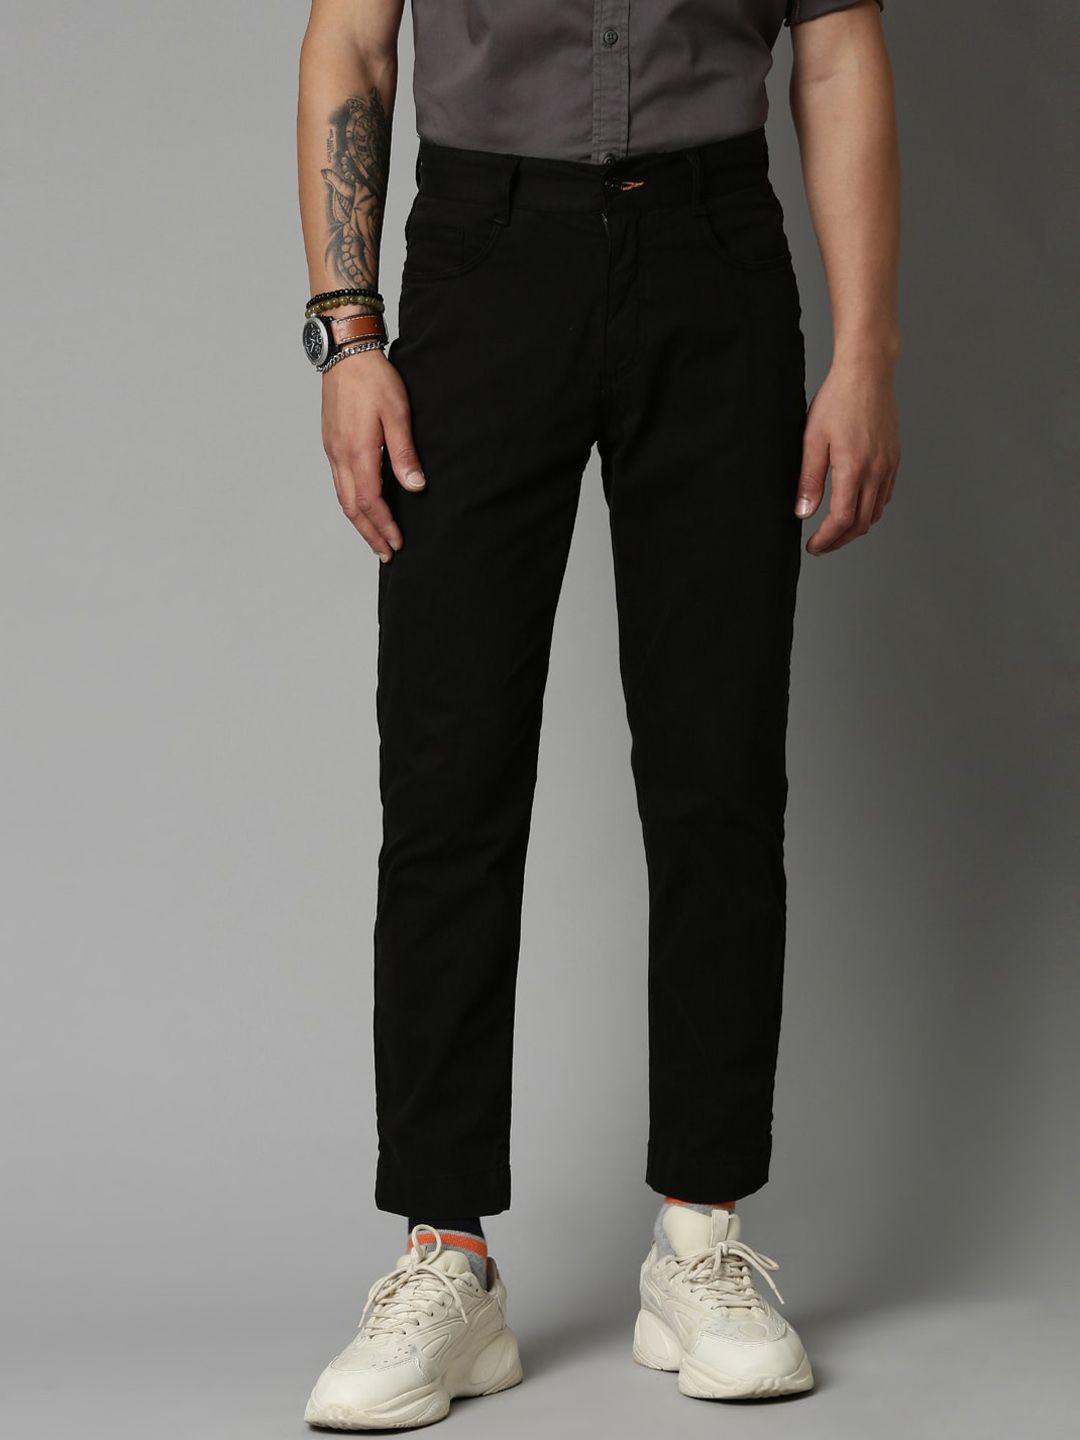 breakbounce men black comfort slim fit chinos trousers